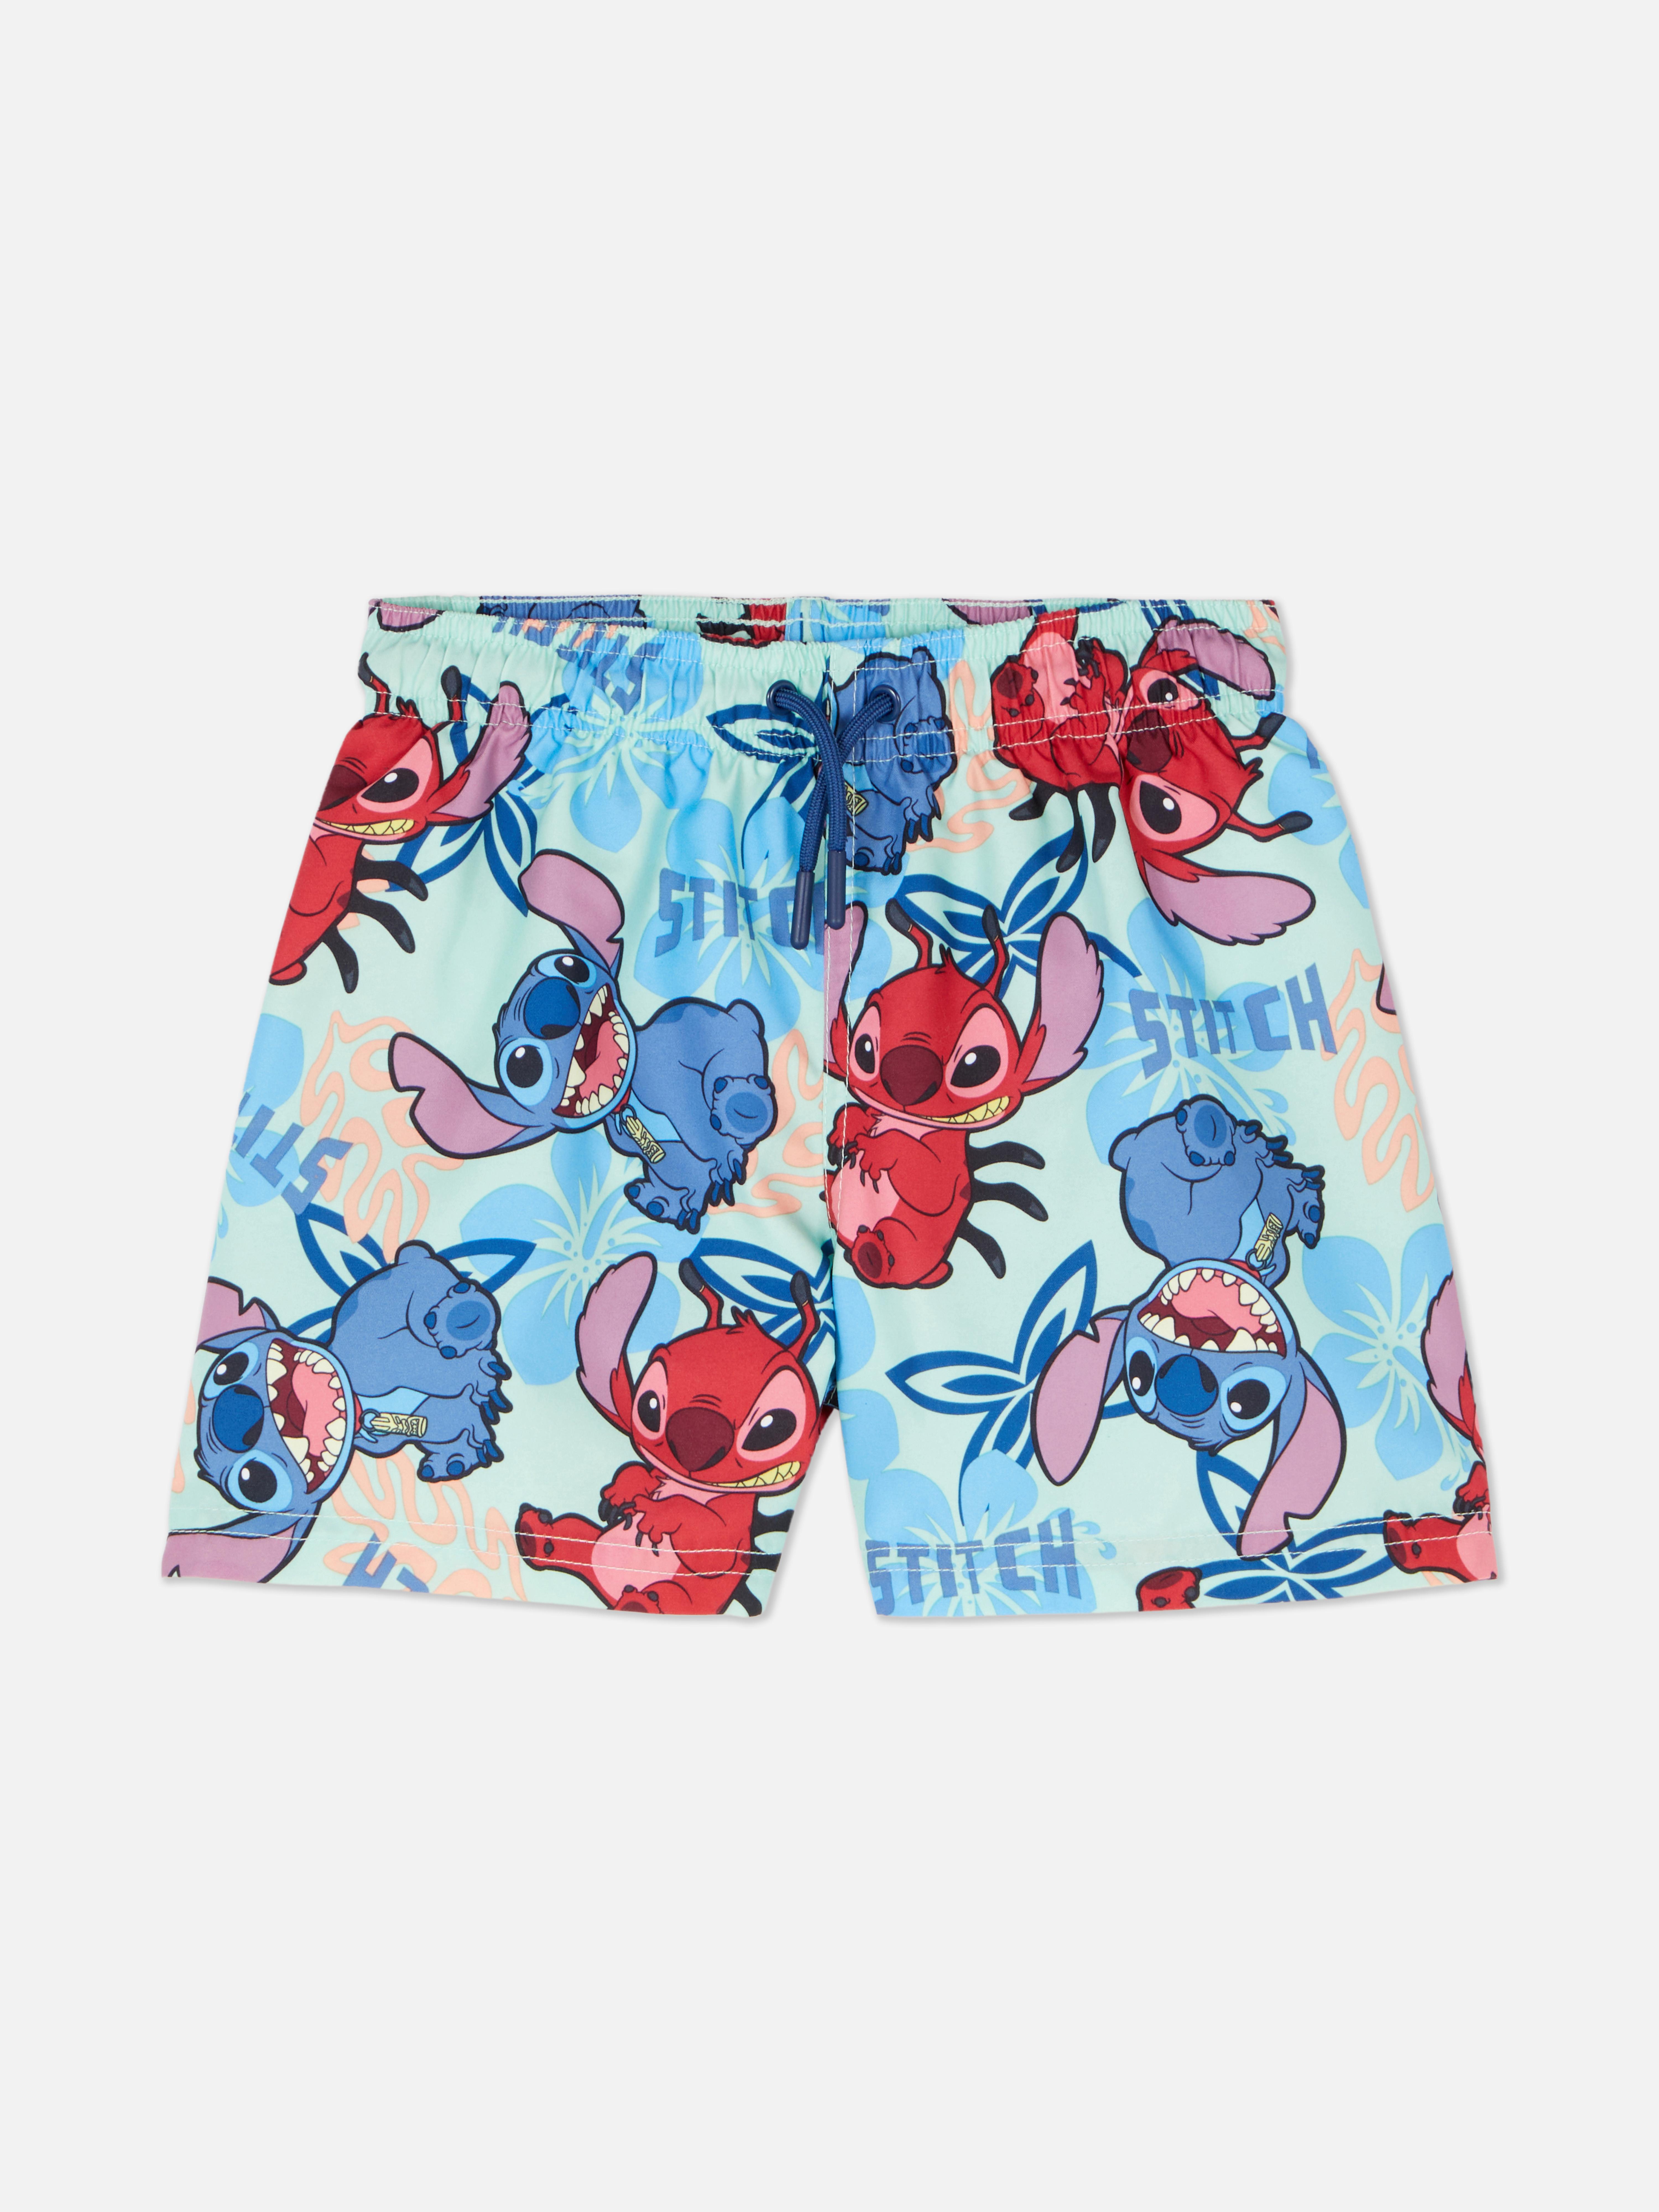 „Disney Lilo & Stitch“ Boardshorts